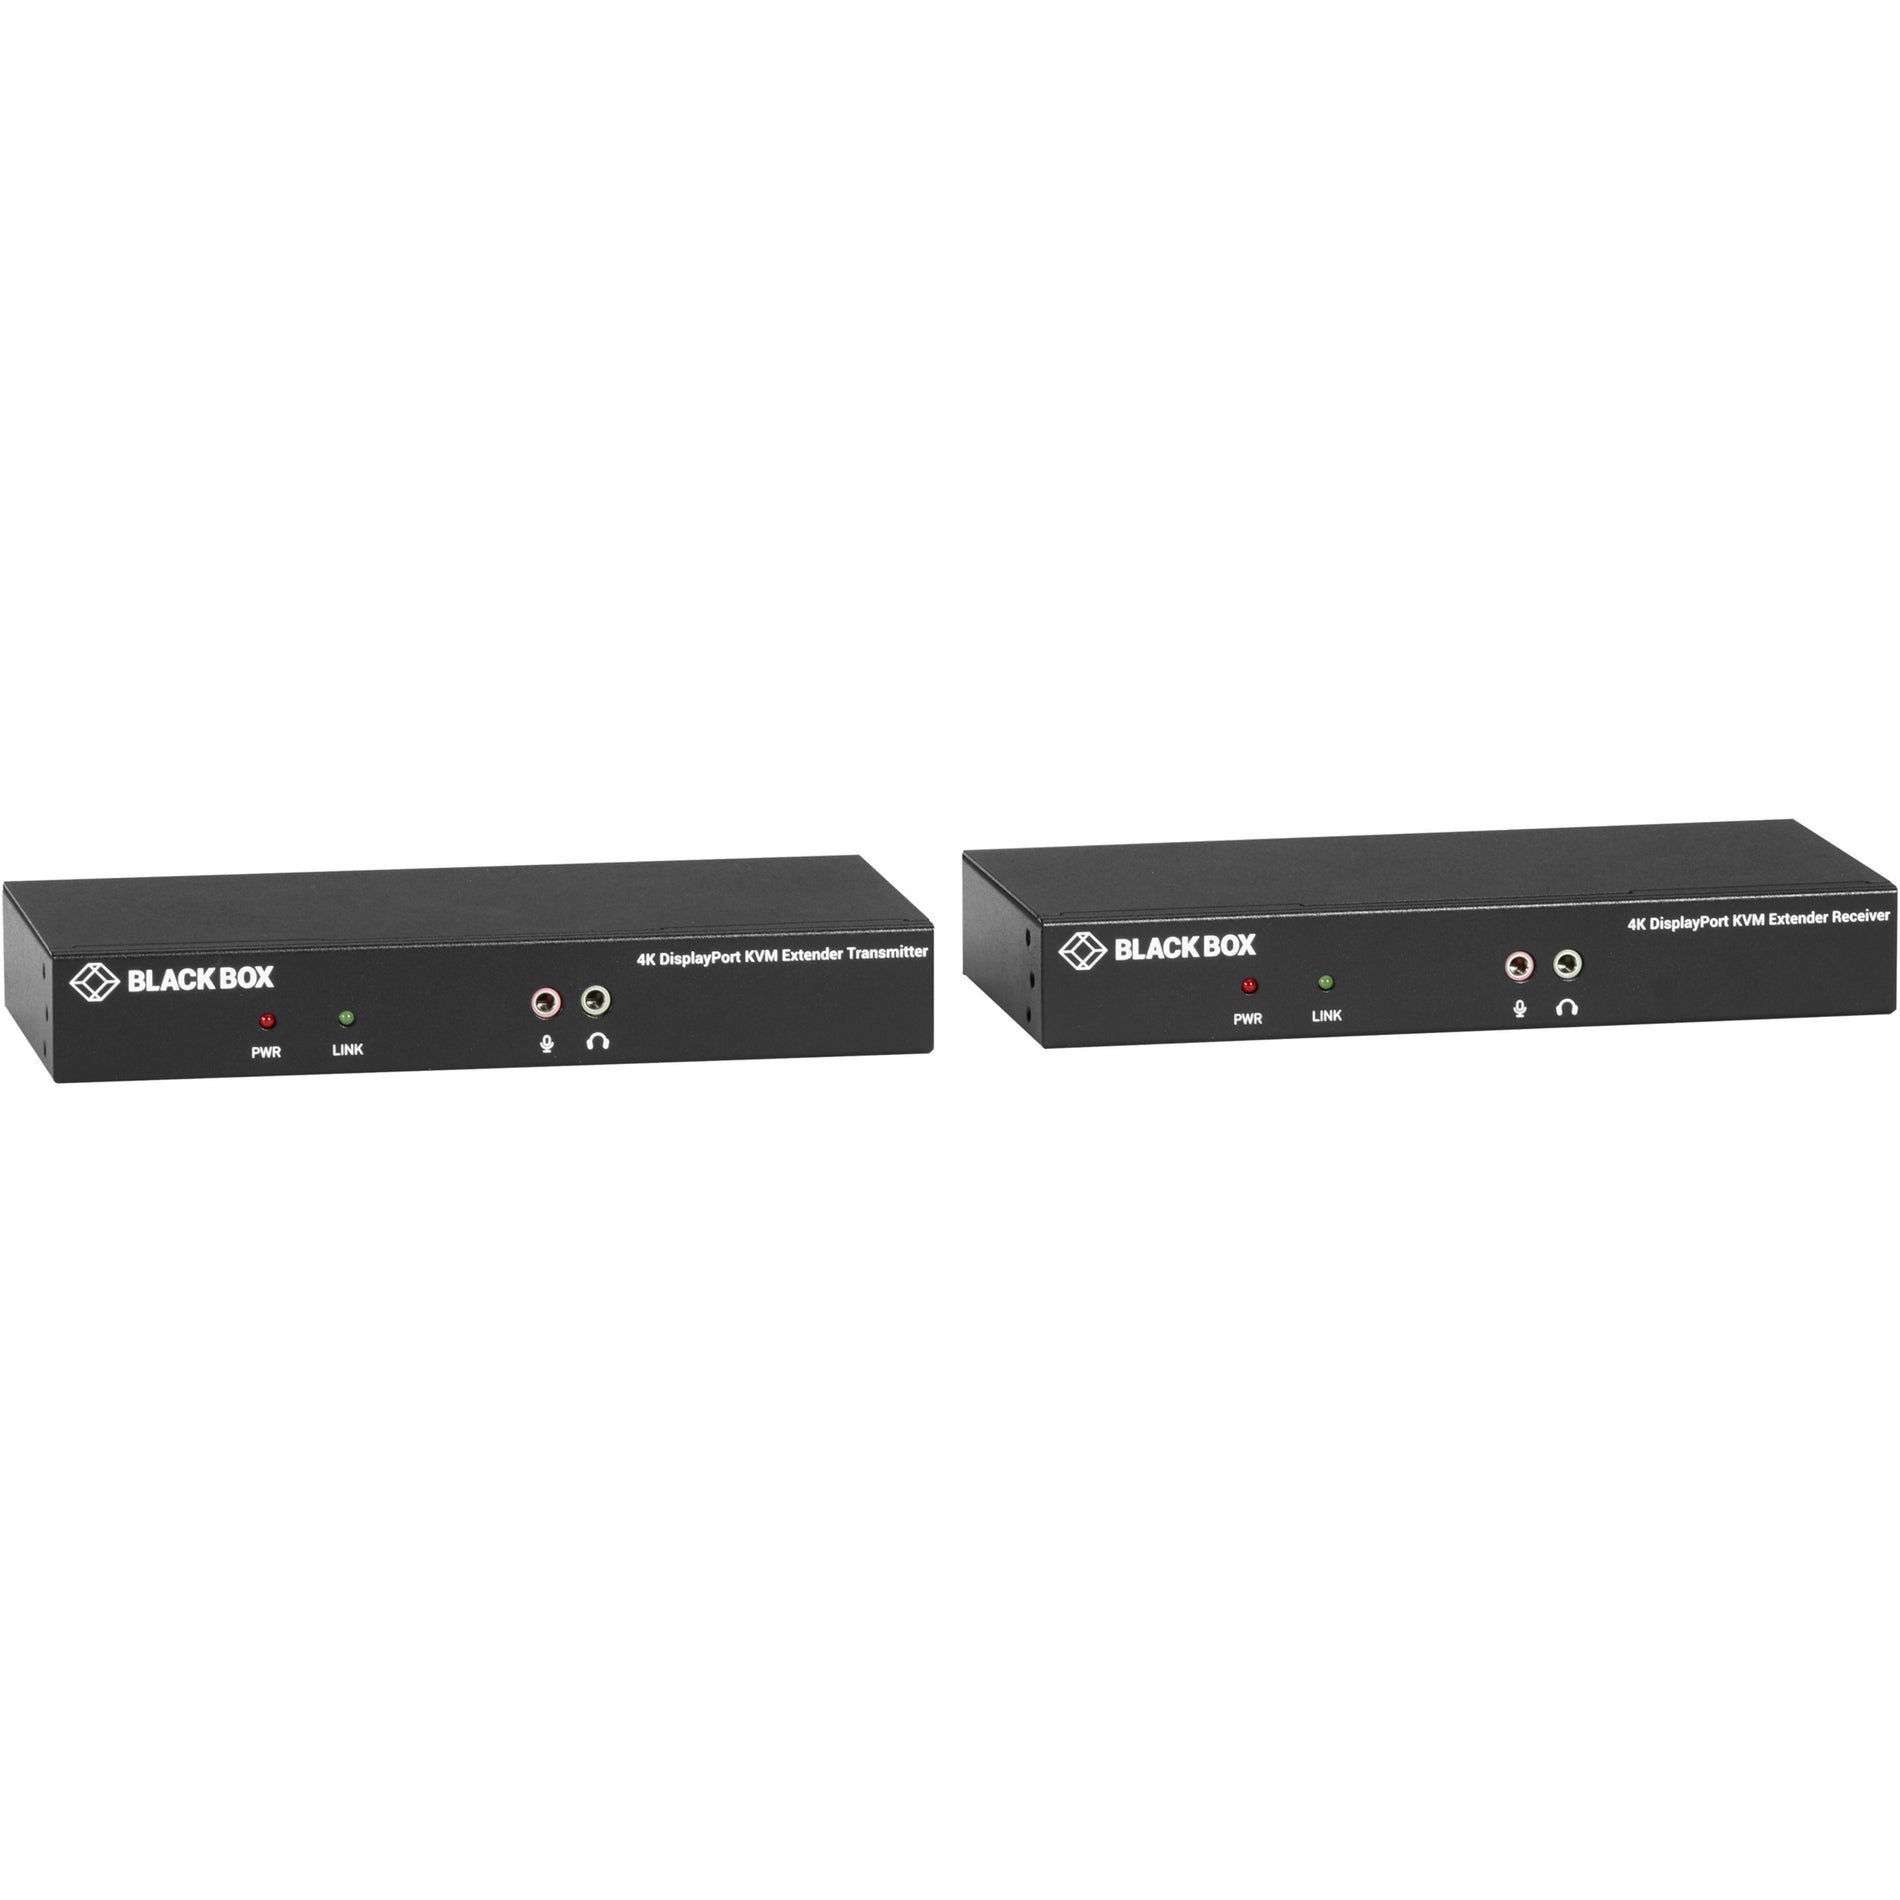 Black Box KVXLCDP-100 KVM Extender, 4K Video, 328.08 ft Maximum Distance, 2 Year Warranty